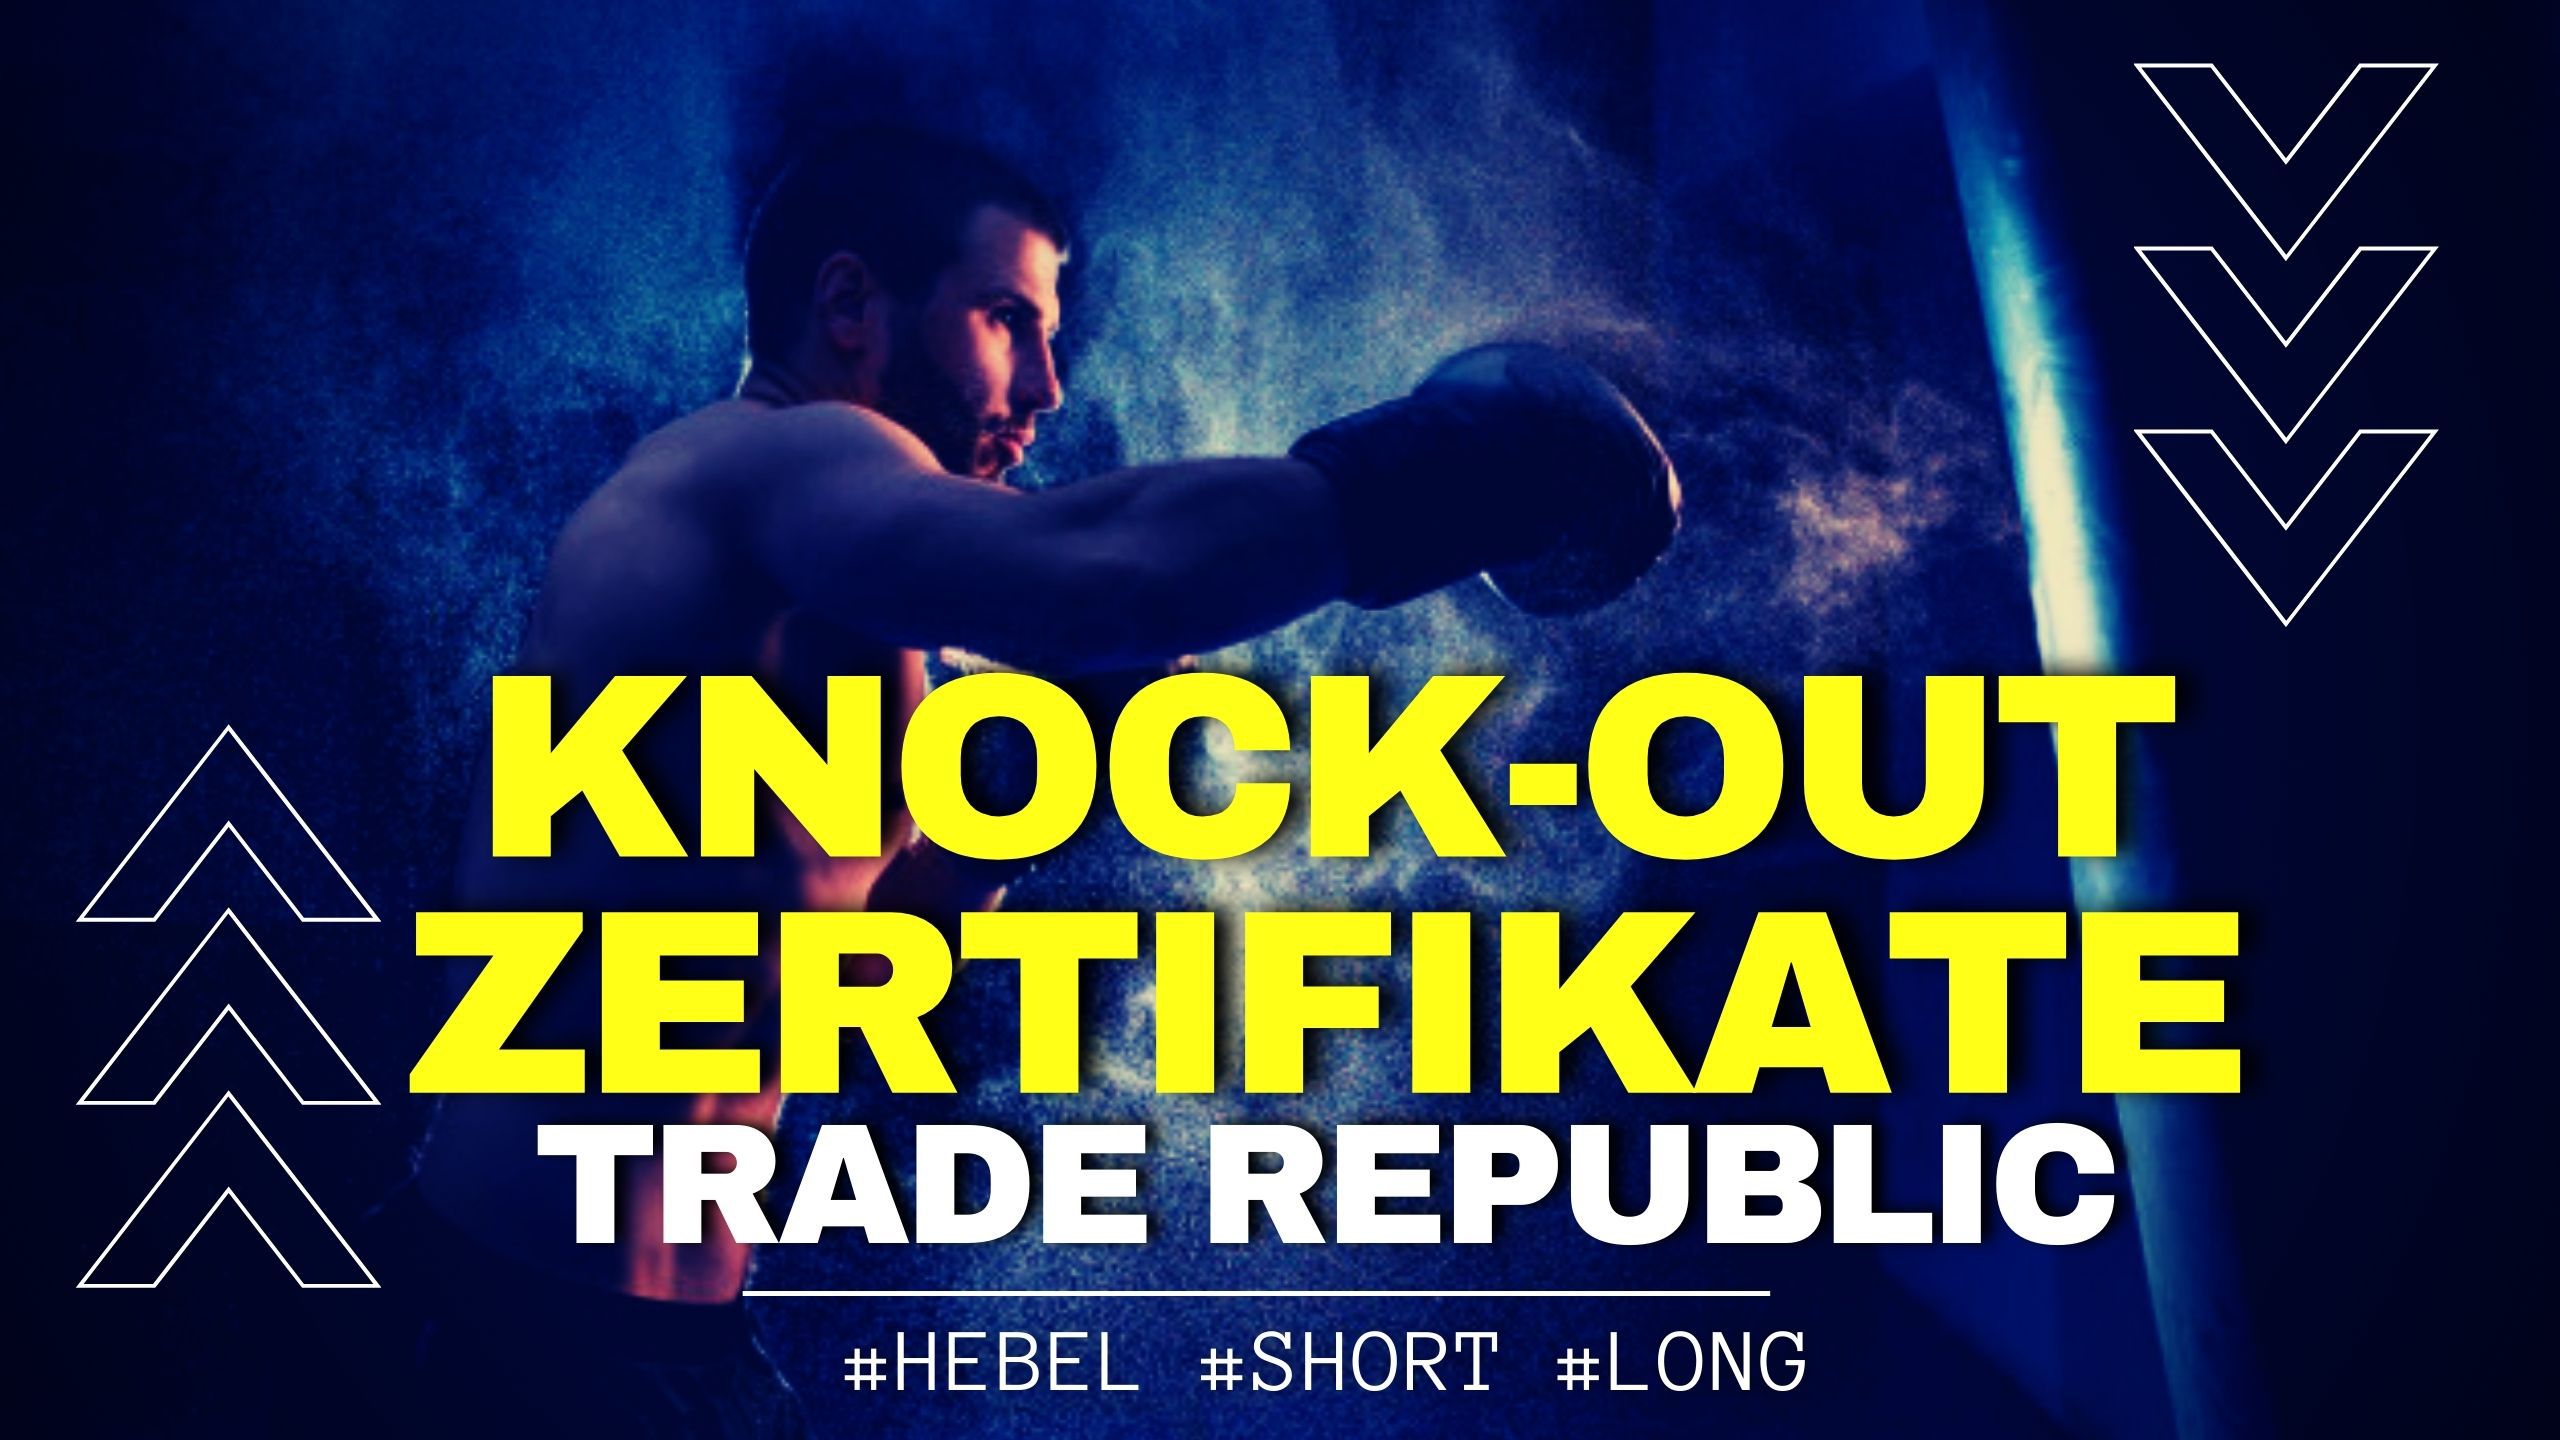 Knock-Out-Zertifikate bei Trade Republic kaufen [Anleitung]